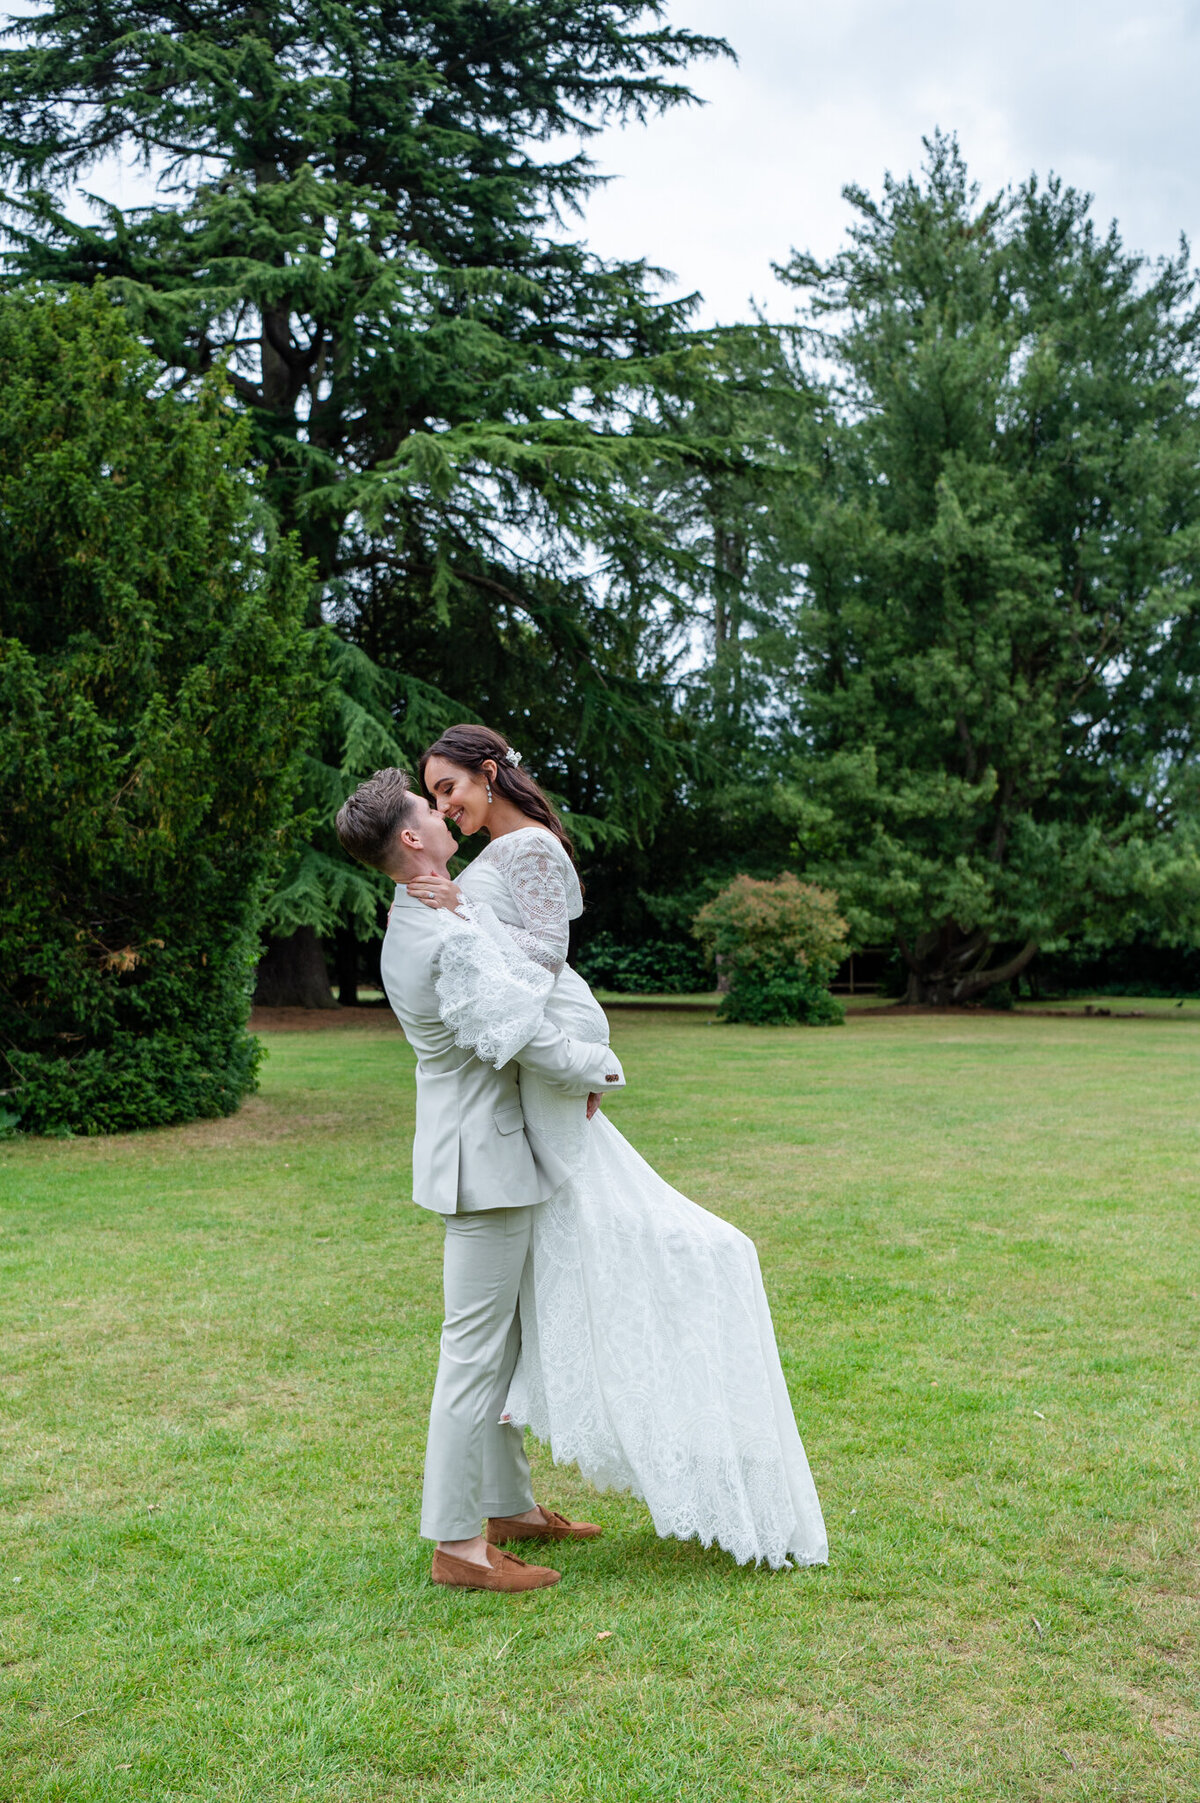 Chloe Bolam - UK Wedding and Engagment Photographer - Swanbourne House Wedding Venue Milton Keynes - Destination Wedding in the UK - 16